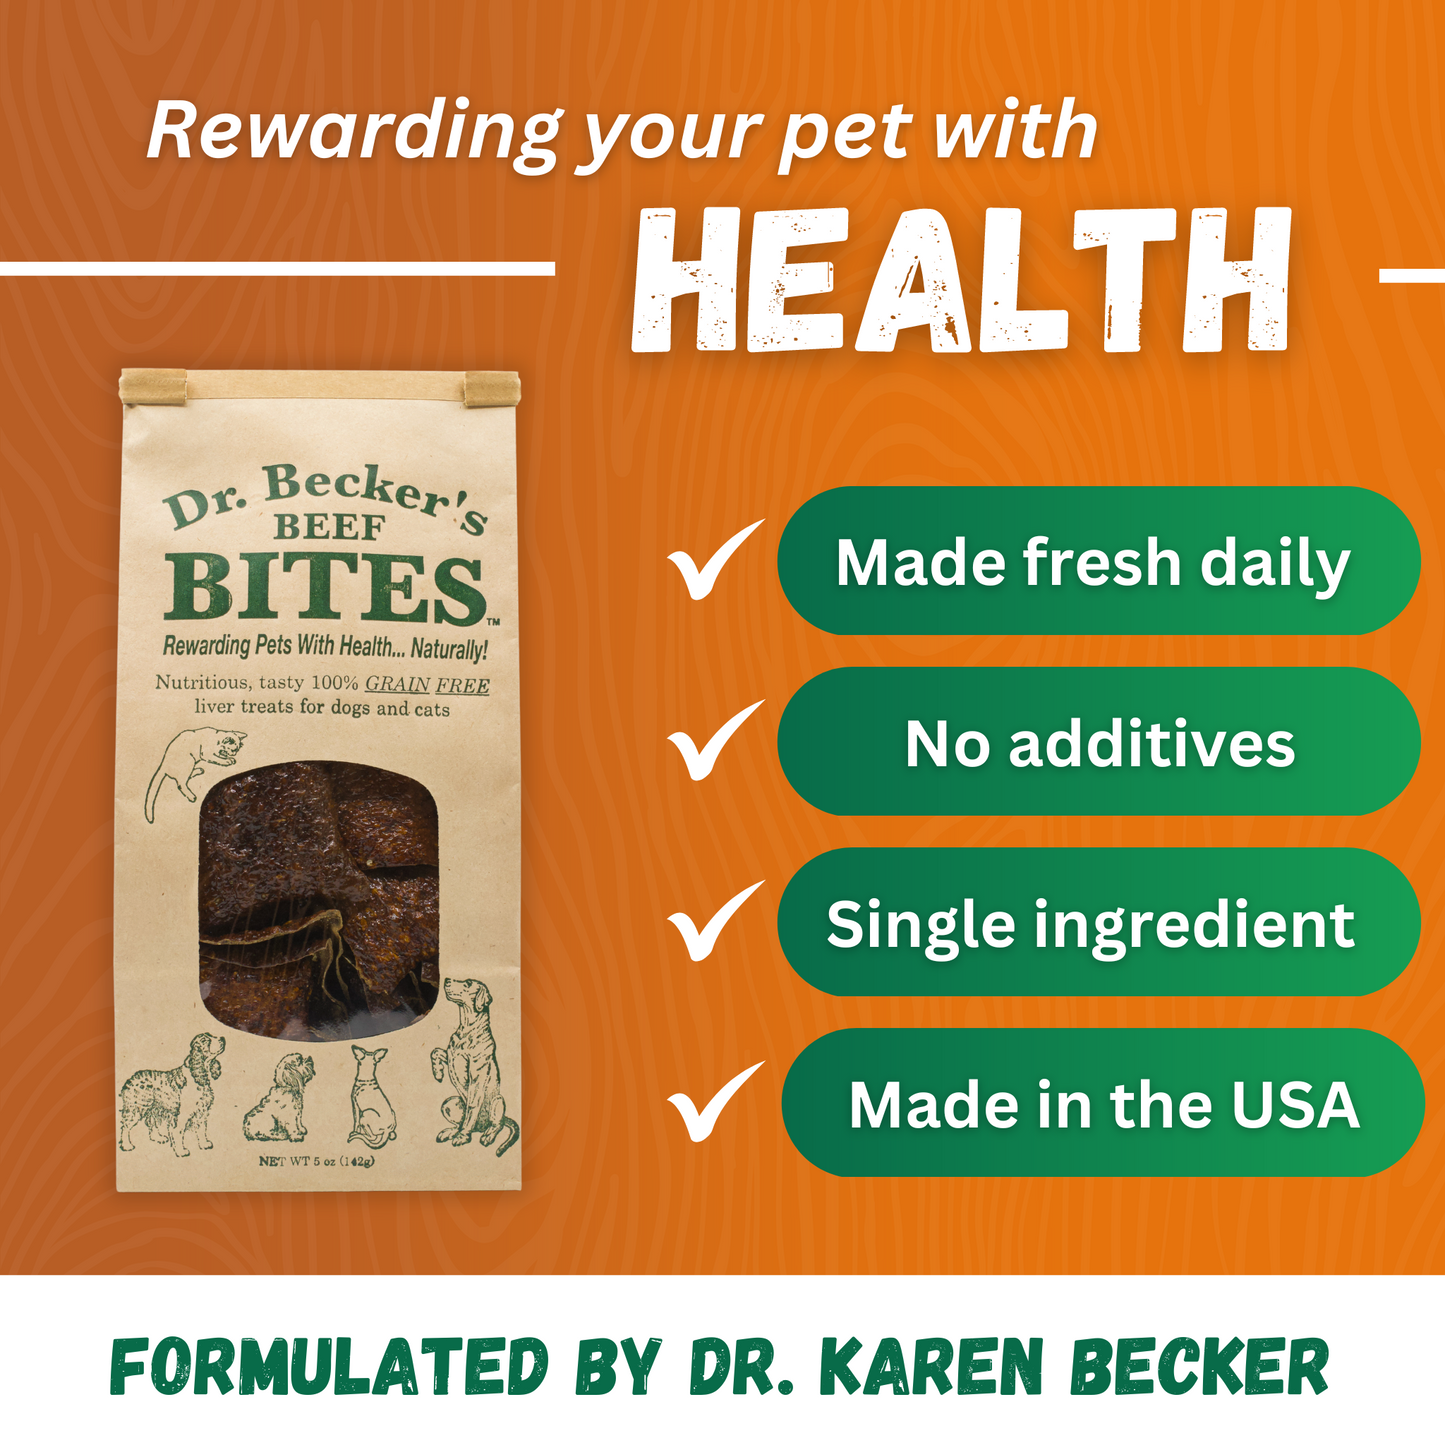 Dr. Becker's Original Beef Bites